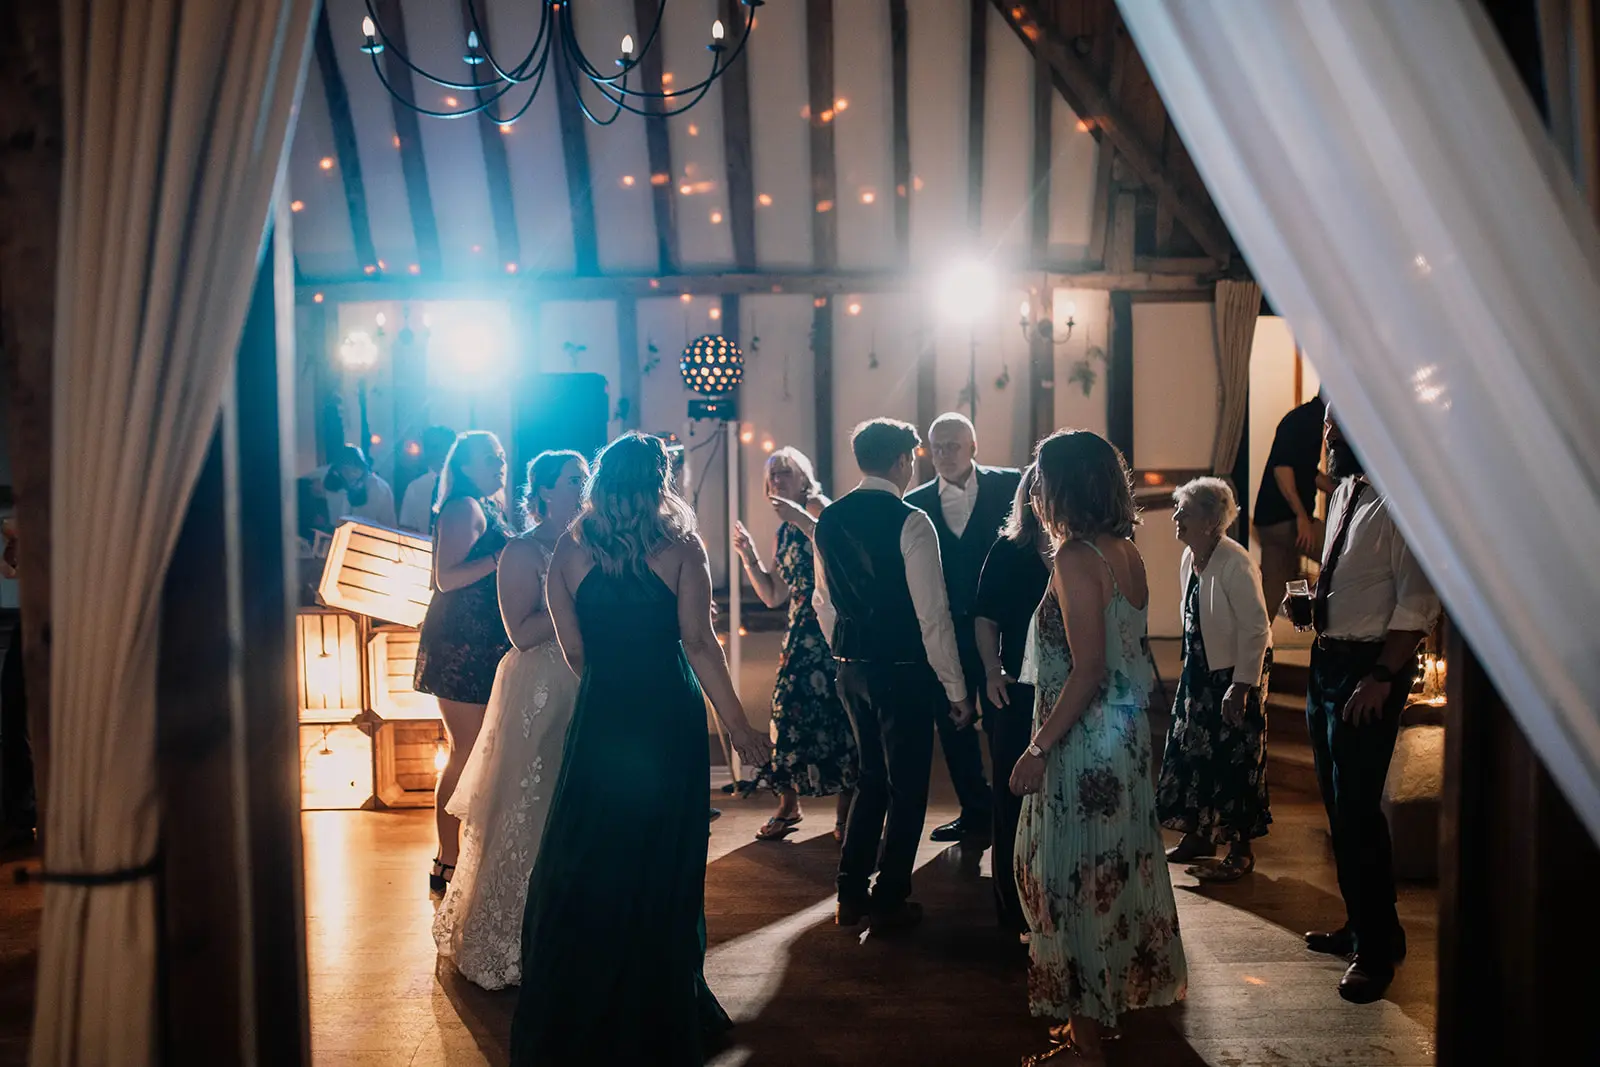 clock barn weddings guests dancing